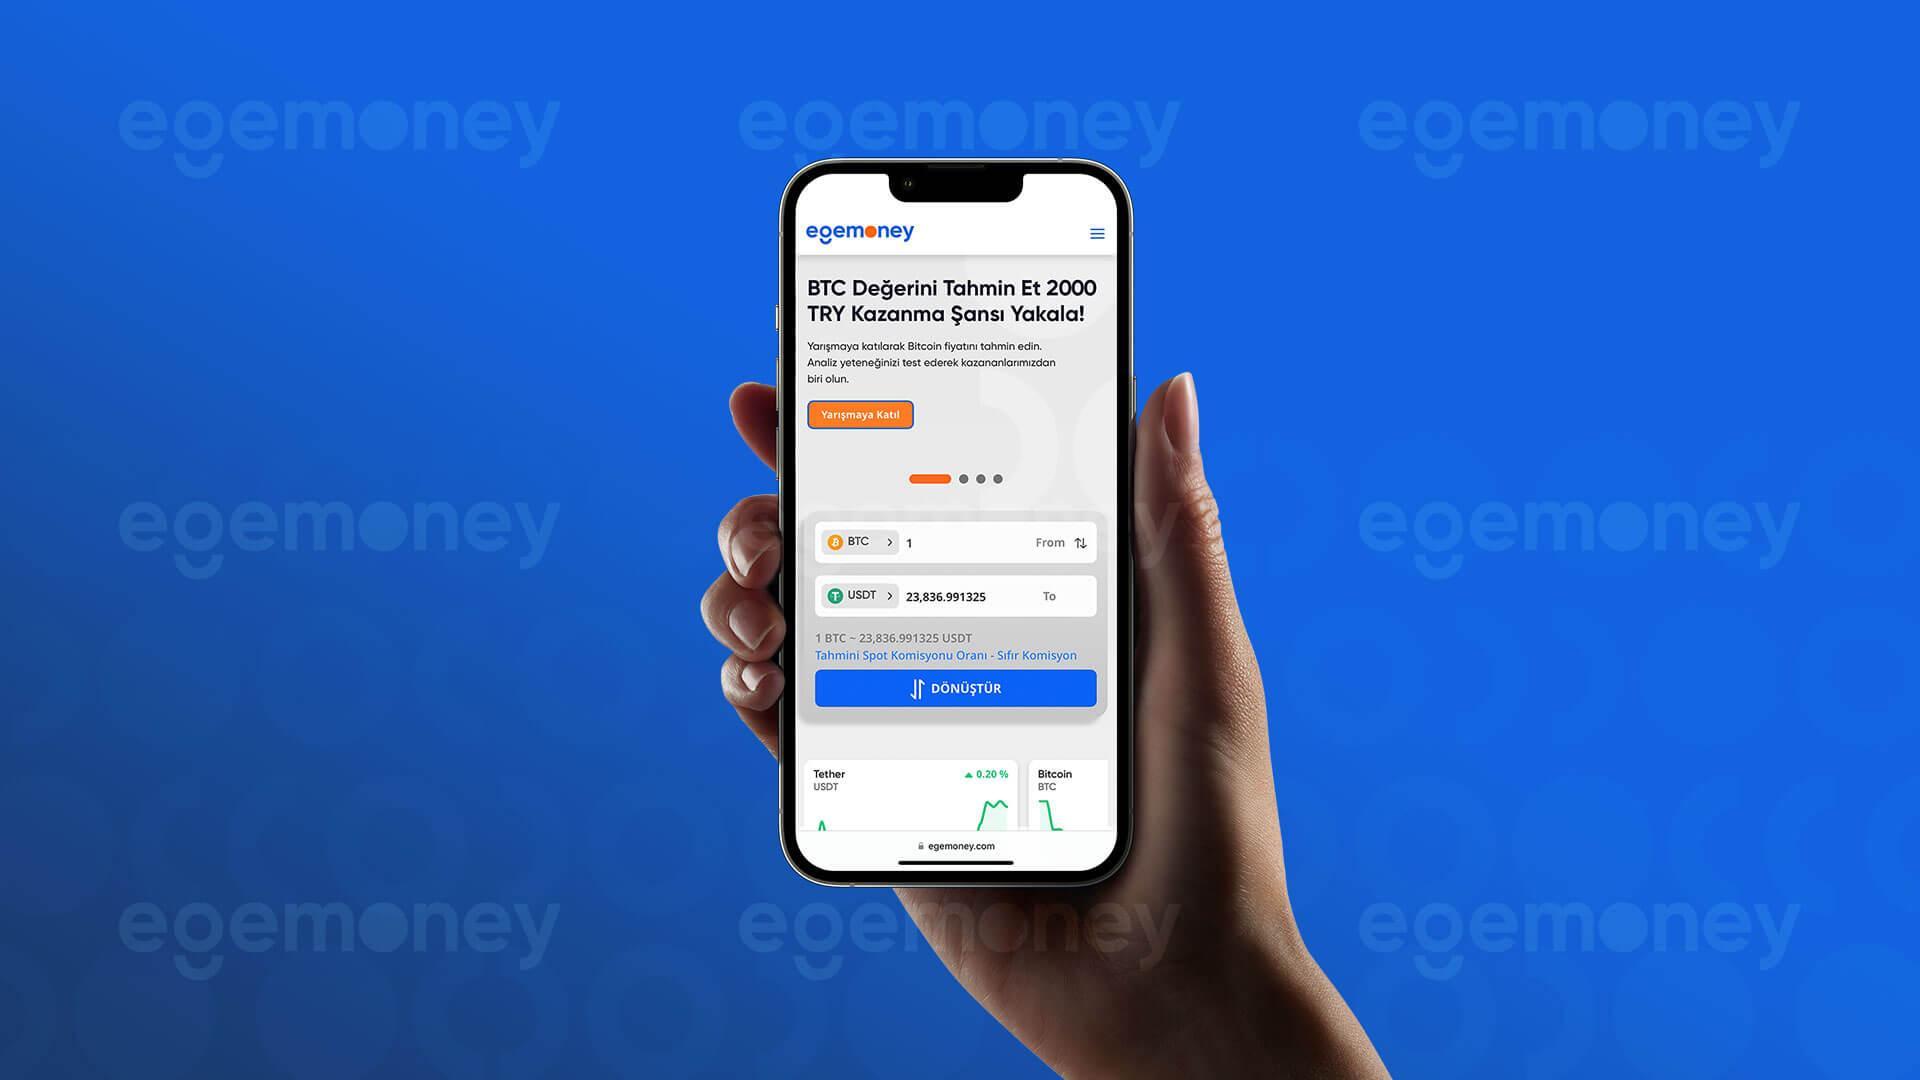 How to use EgeMoney Mobile App?